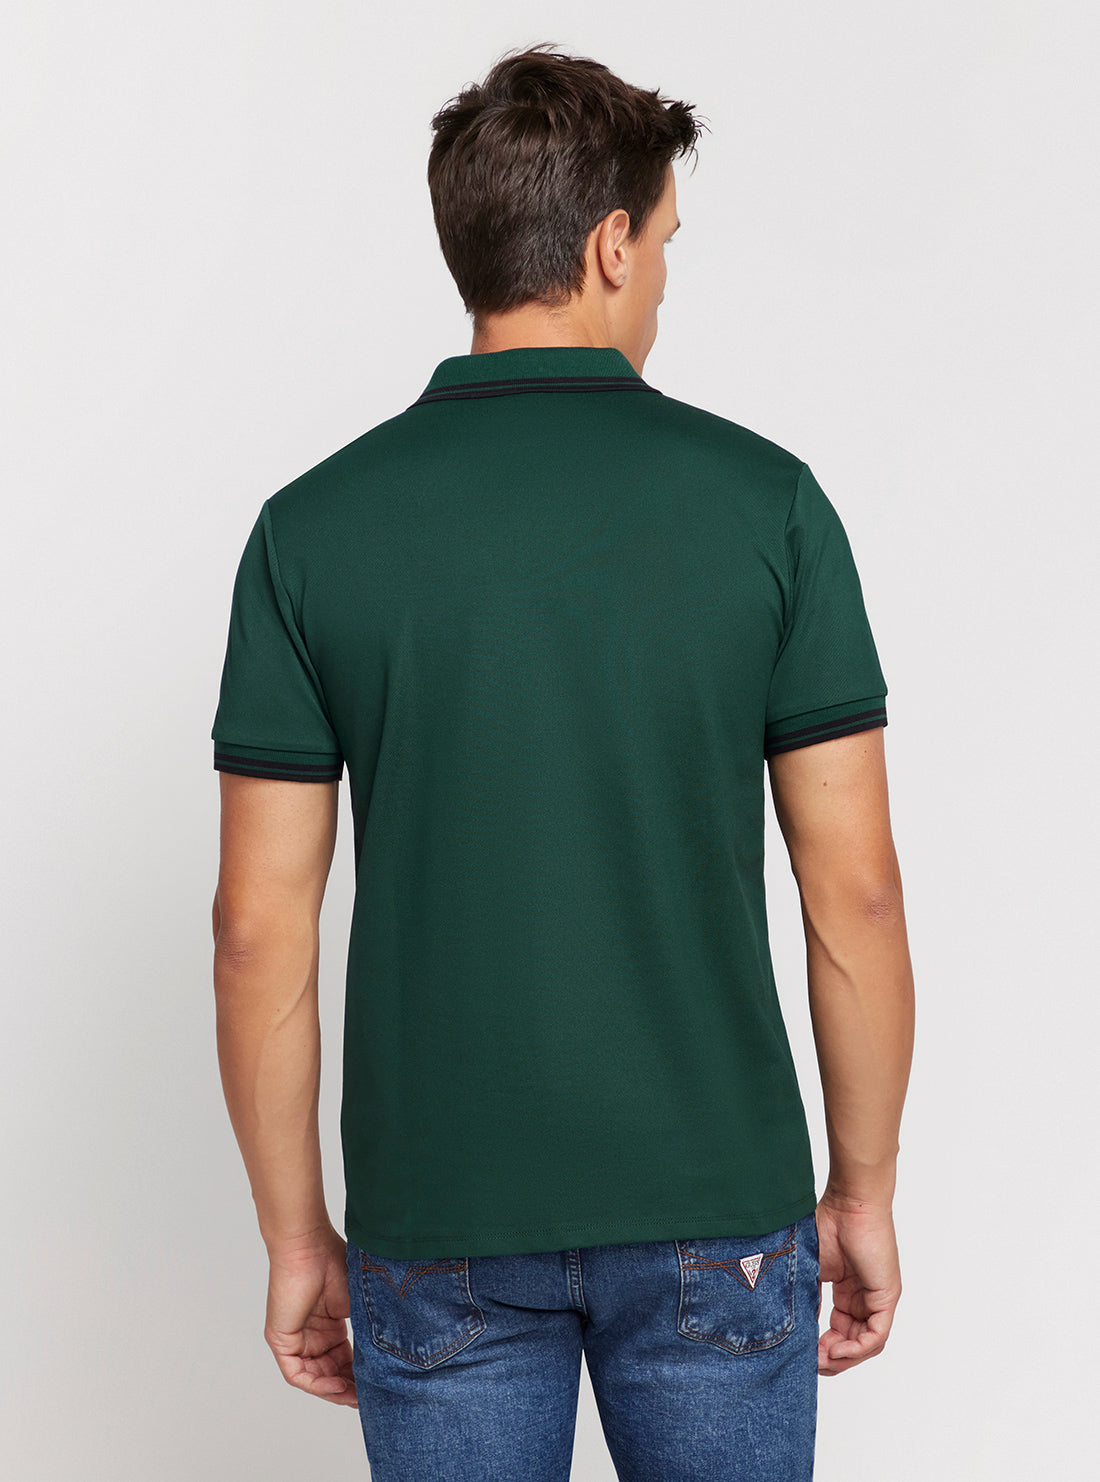 GUESS Green Short Sleeve Pique Polo Shirt back view